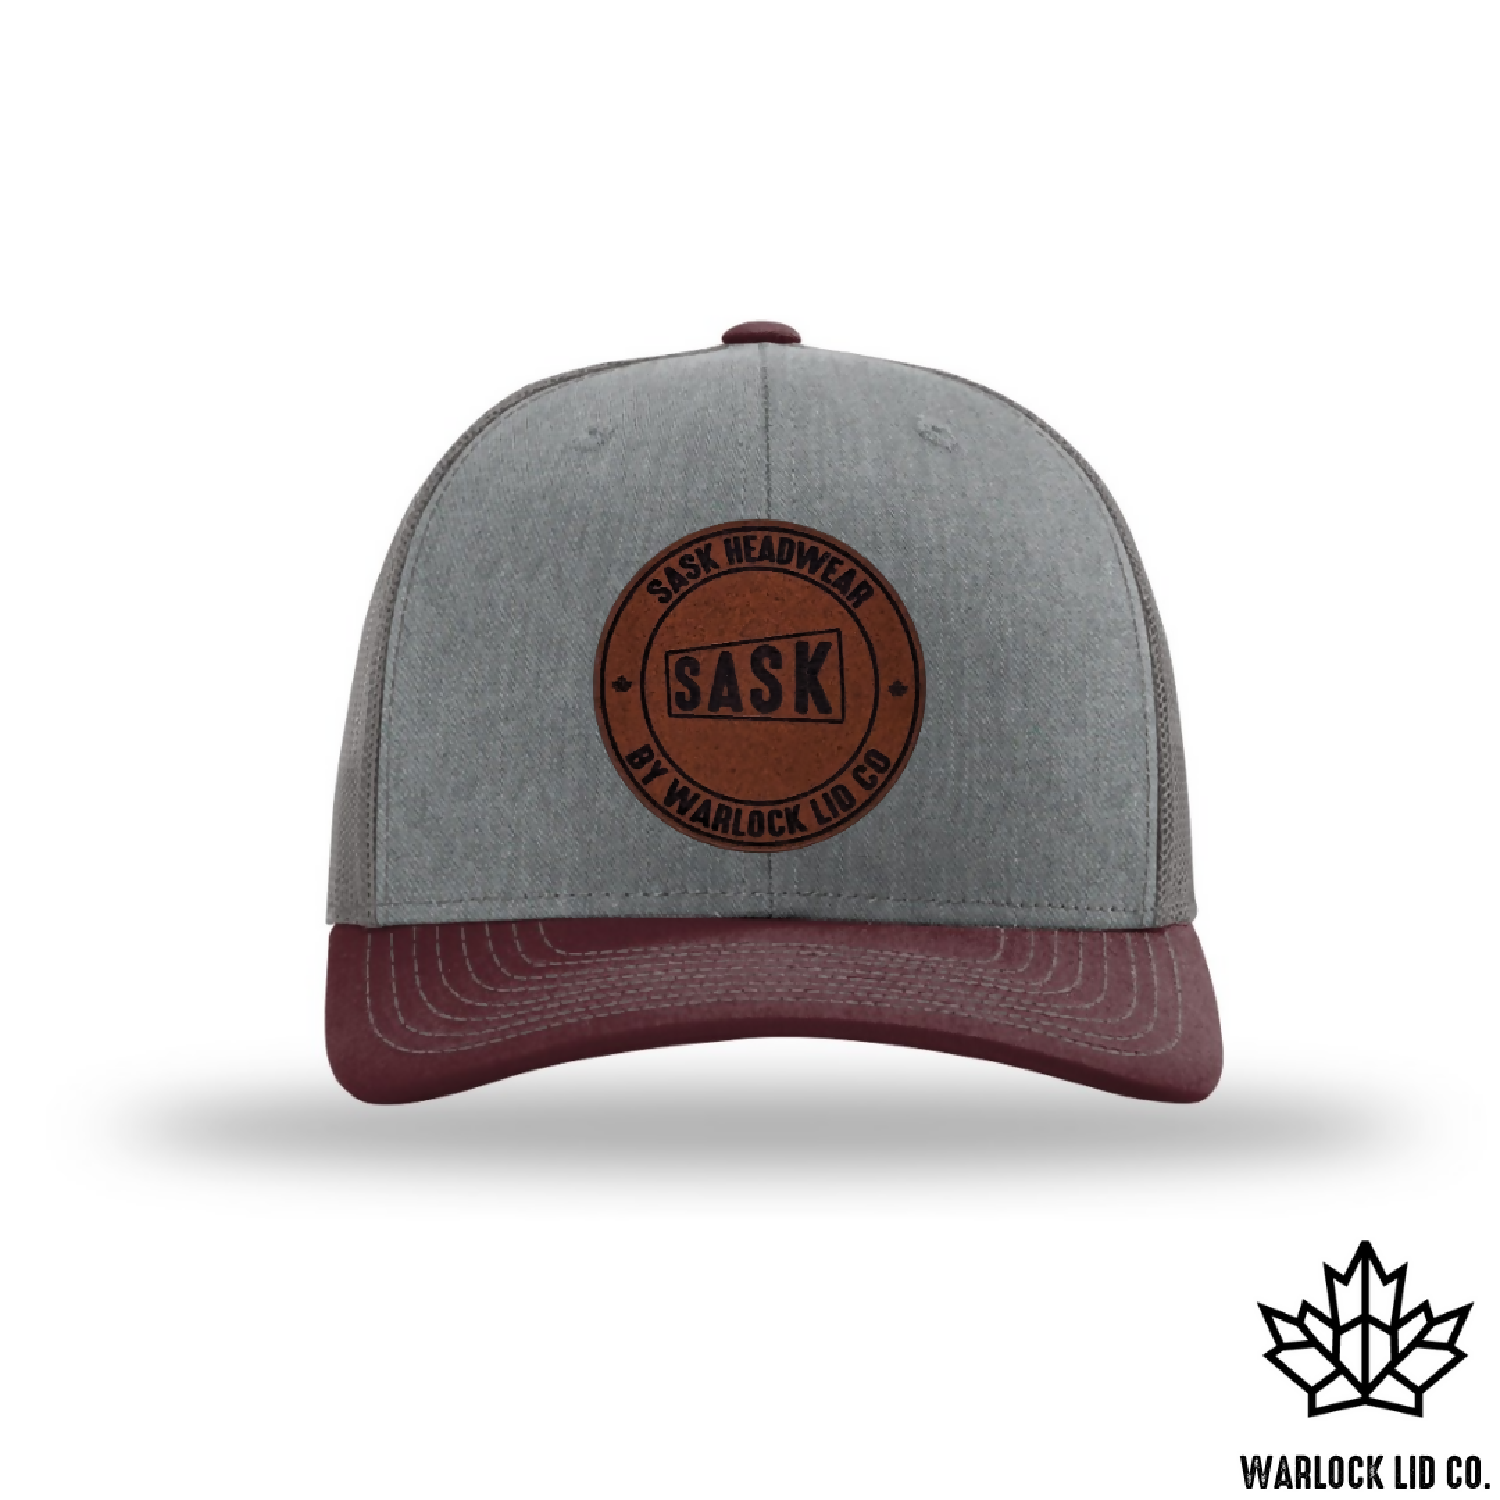 Sask Leather Patch Hats | Warlock Lid Co | Adjustable Snapback